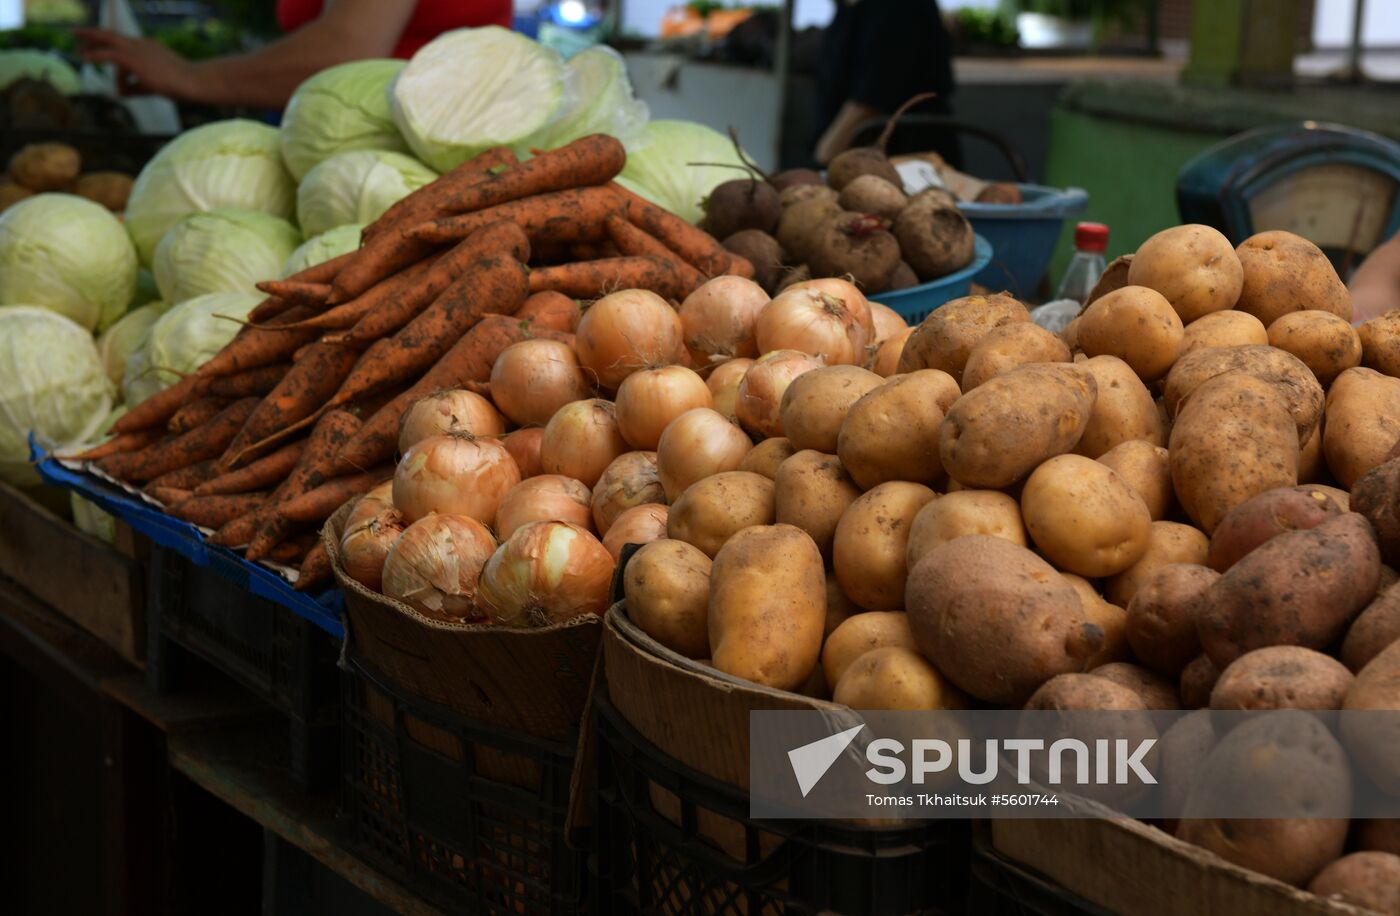 Central market in Sukhumi